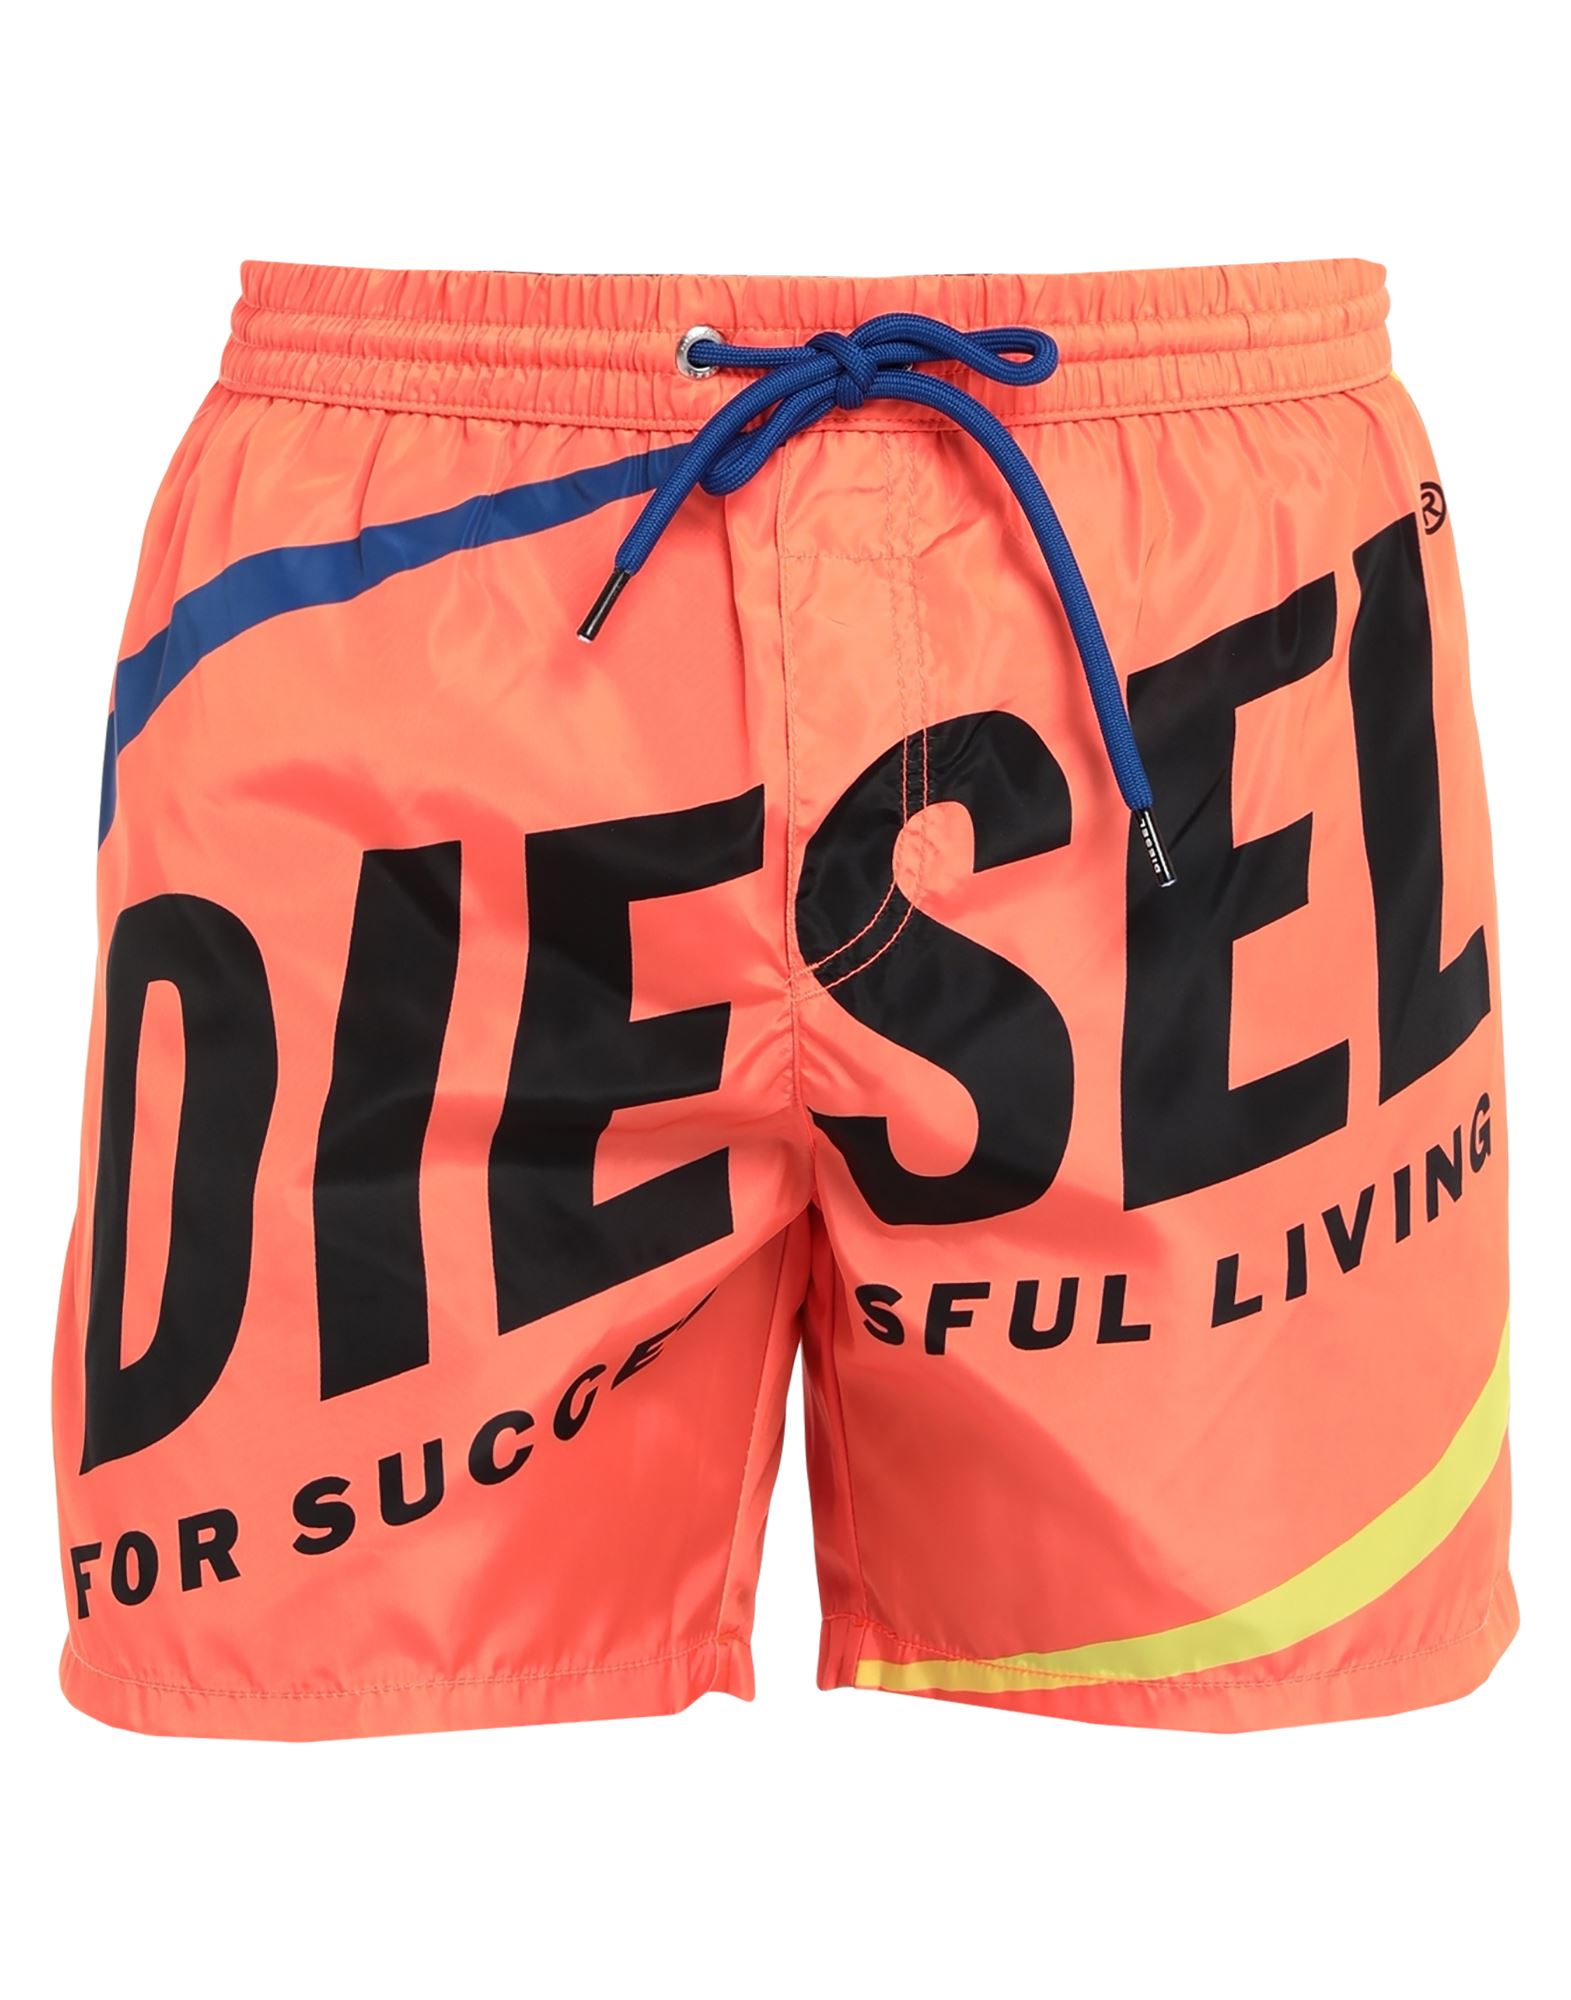 Шорты diesel. Шорты для плавания Diesel. Плавательные шорты Diesel мужские. Оранжевые шорты дизель. Шорты мужские оранжевые 54.